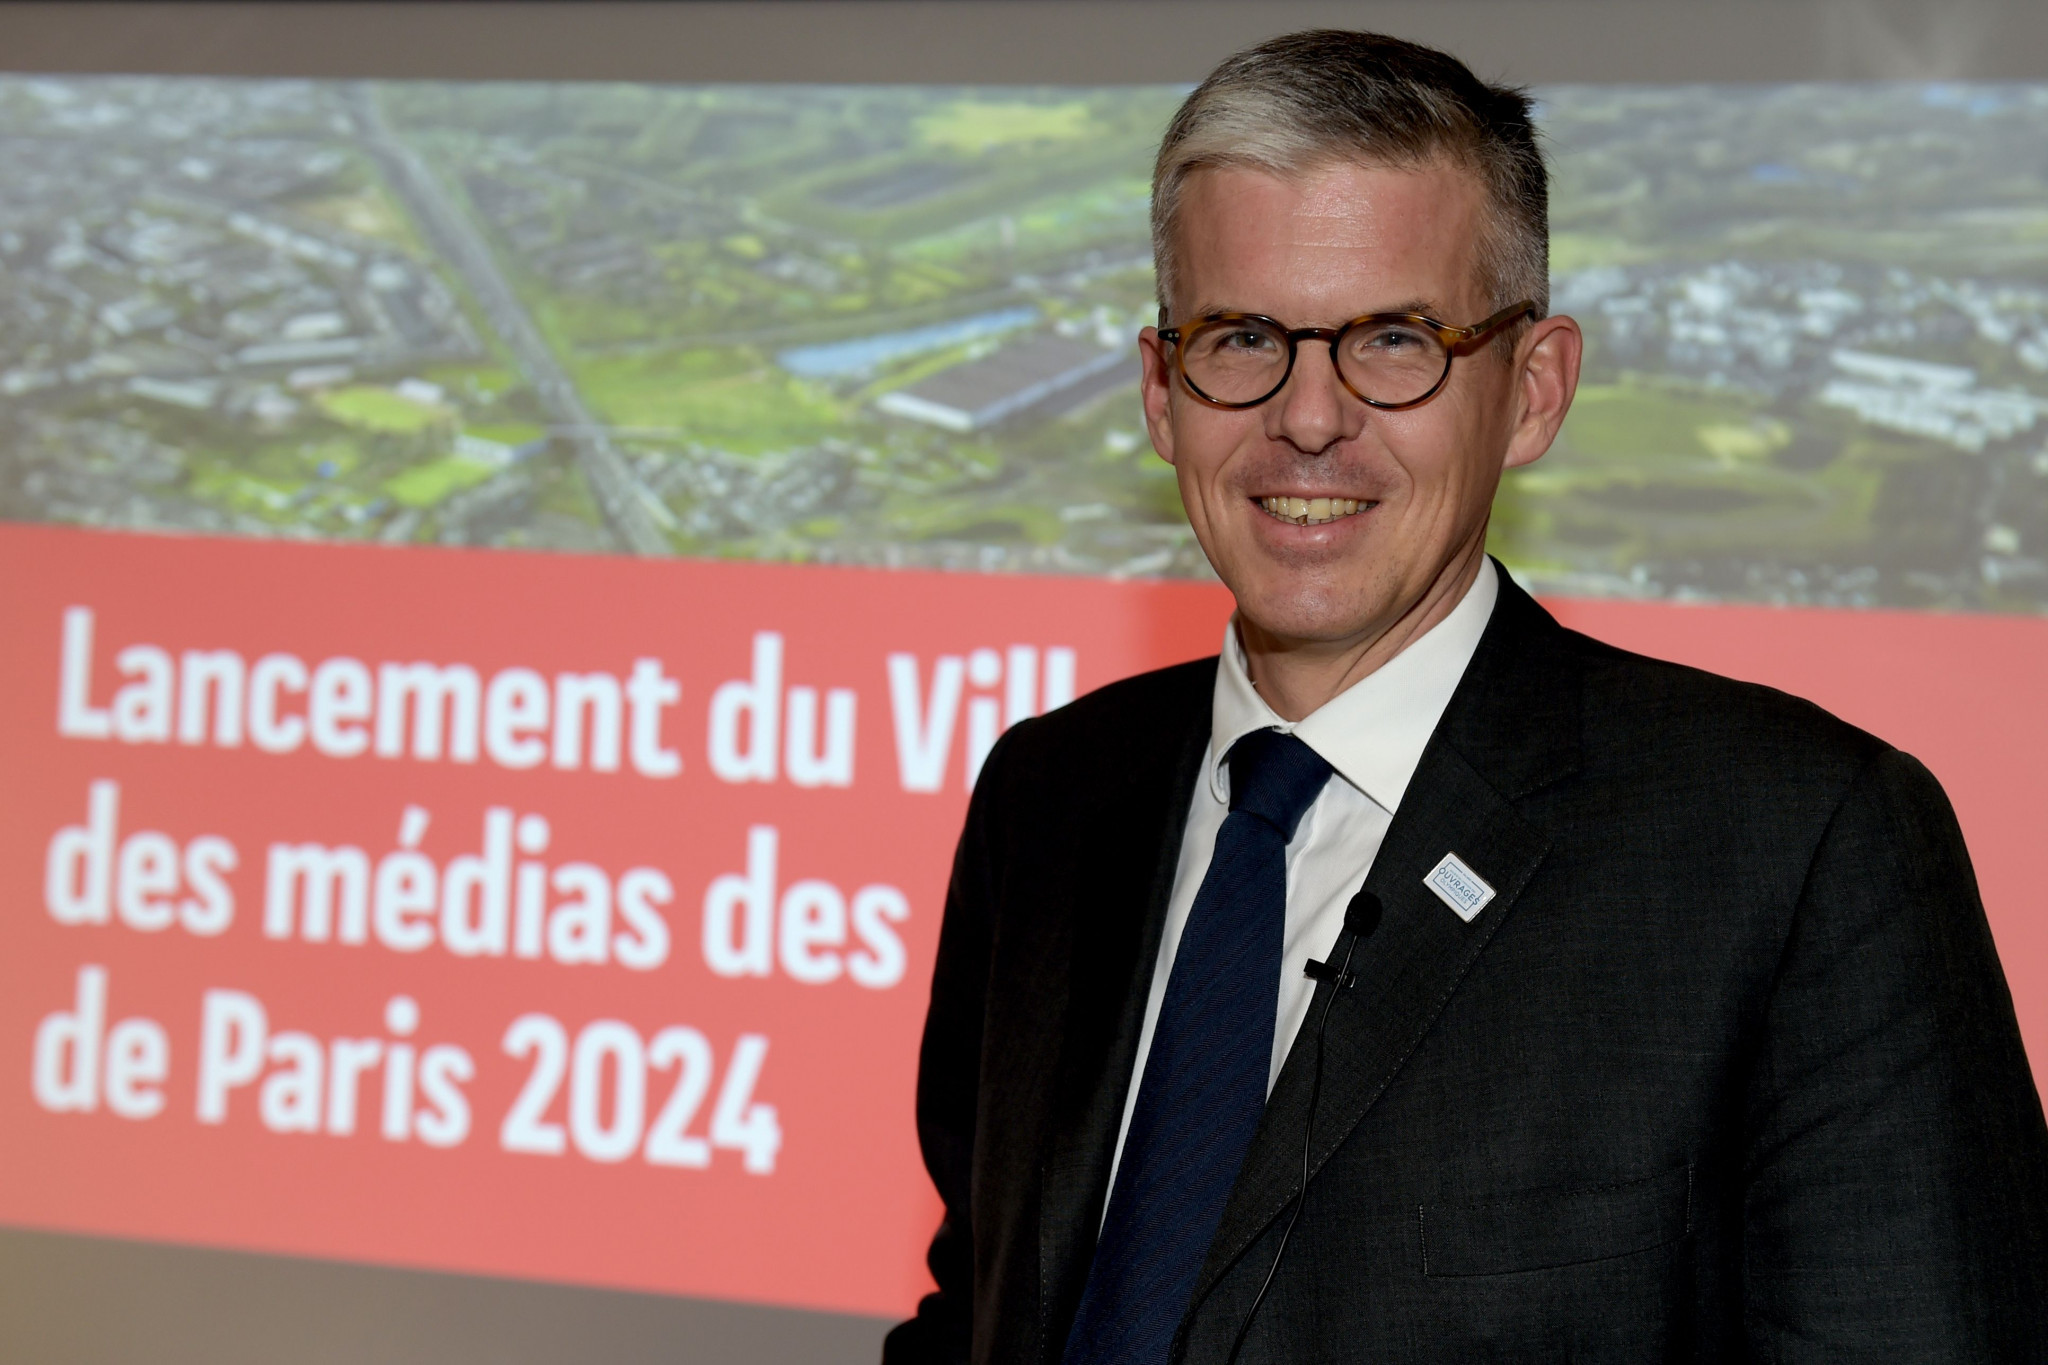 Solideo boss "confident" of delivering Paris 2024 venues on time despite COVID-19